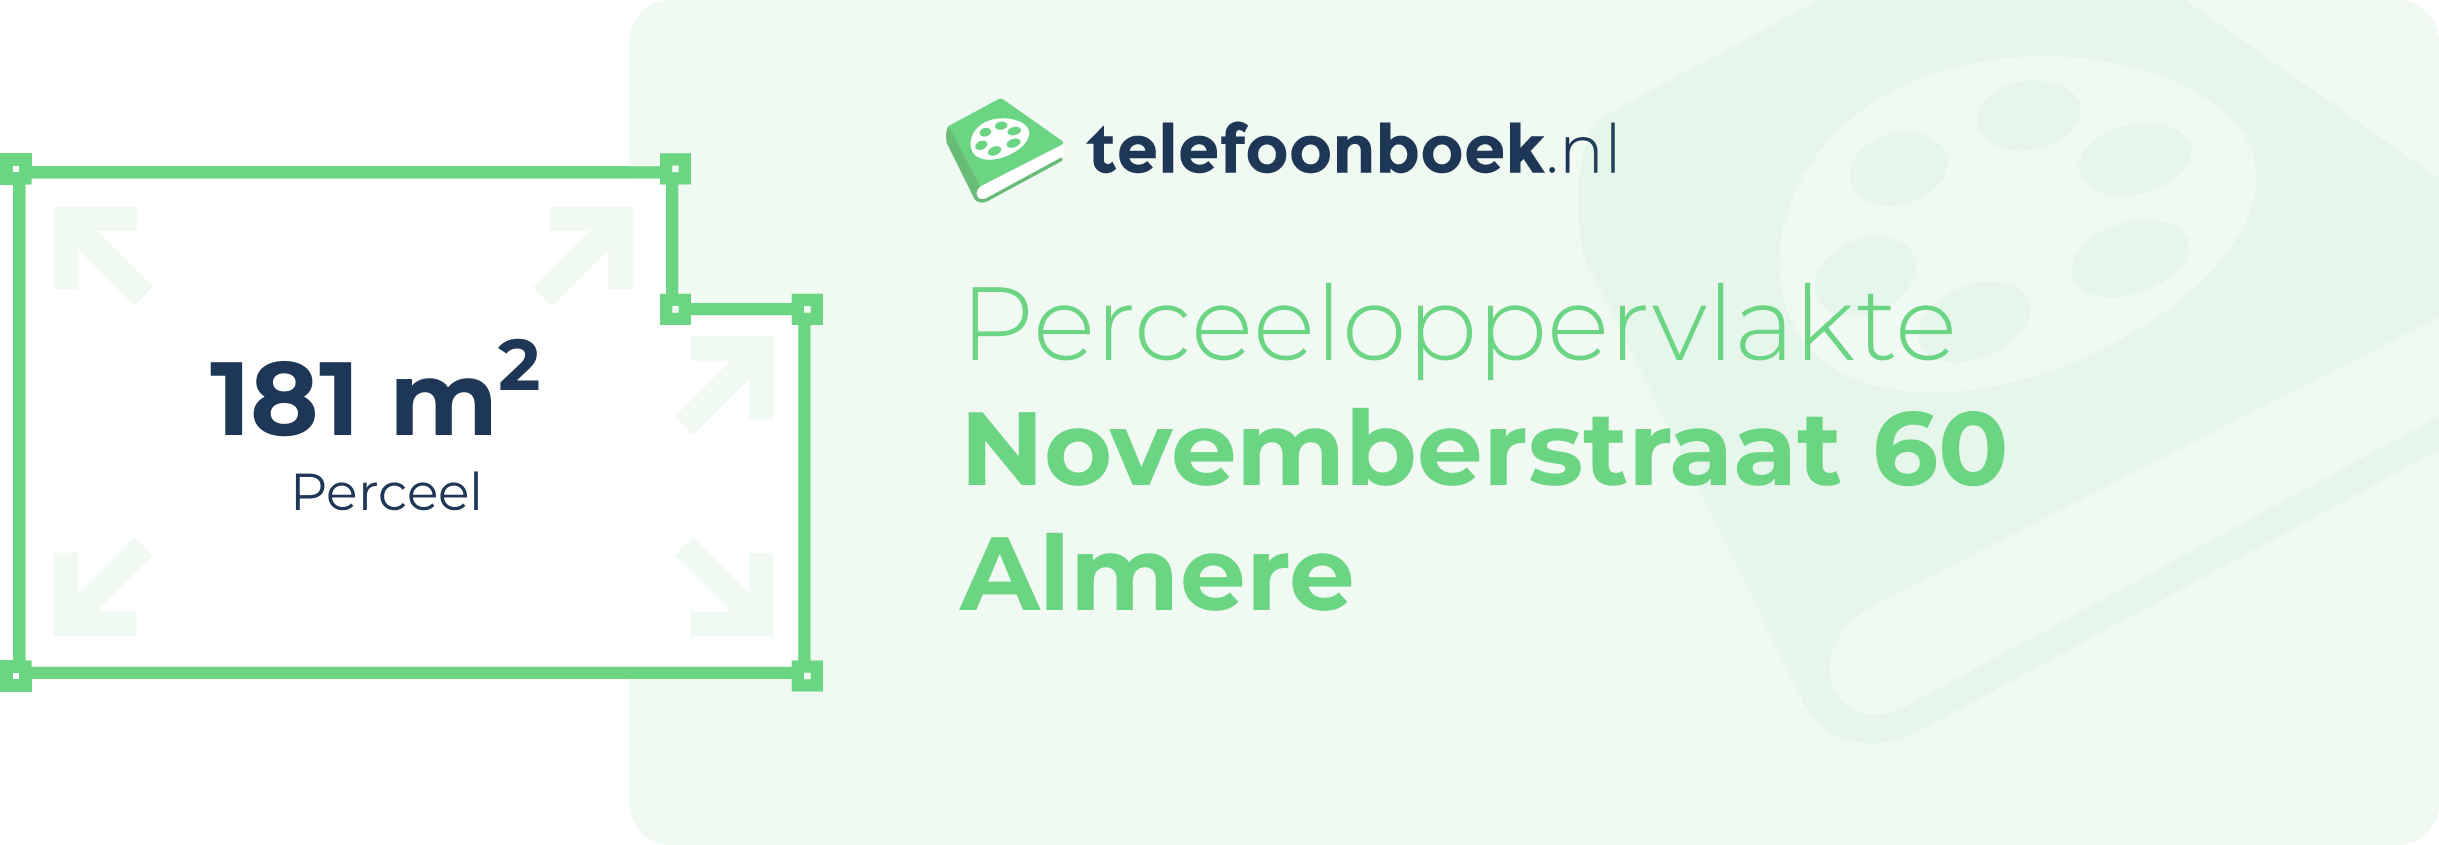 Perceeloppervlakte Novemberstraat 60 Almere